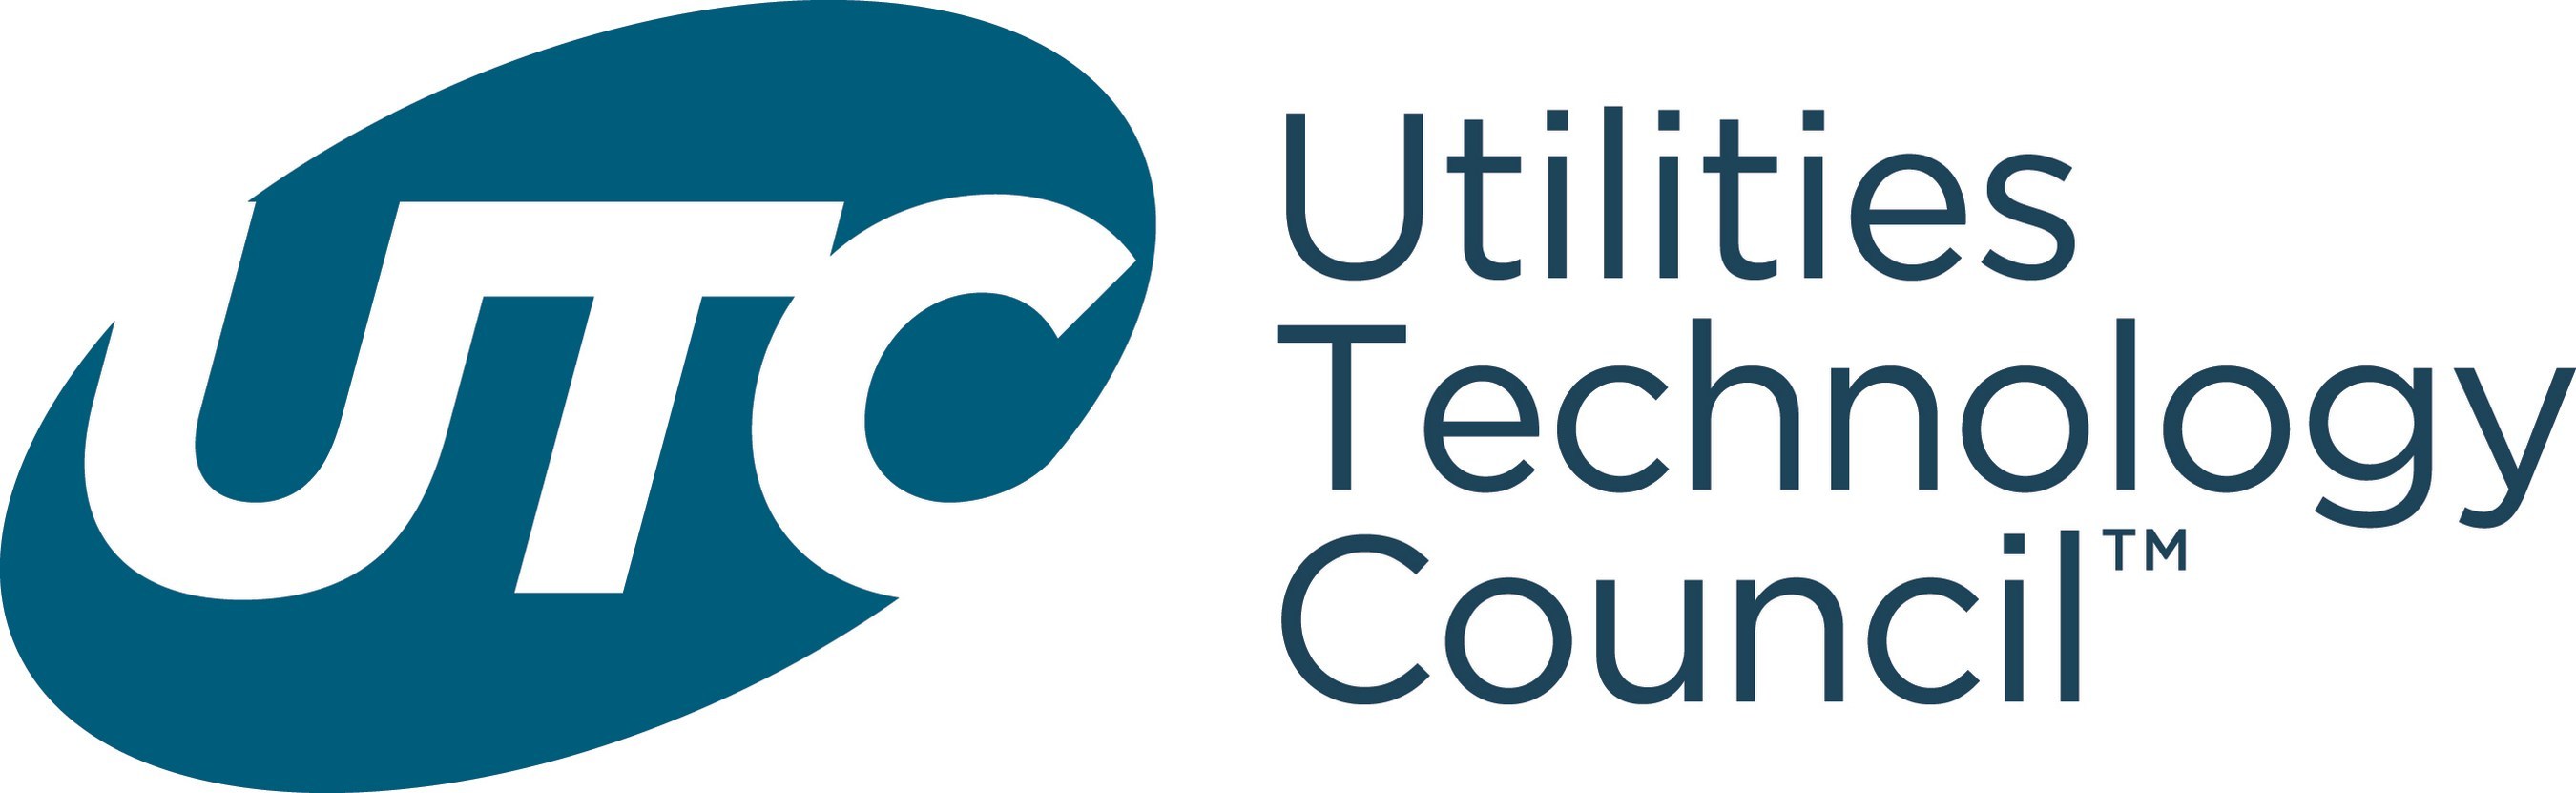 Utilities Technology Council (UTC)